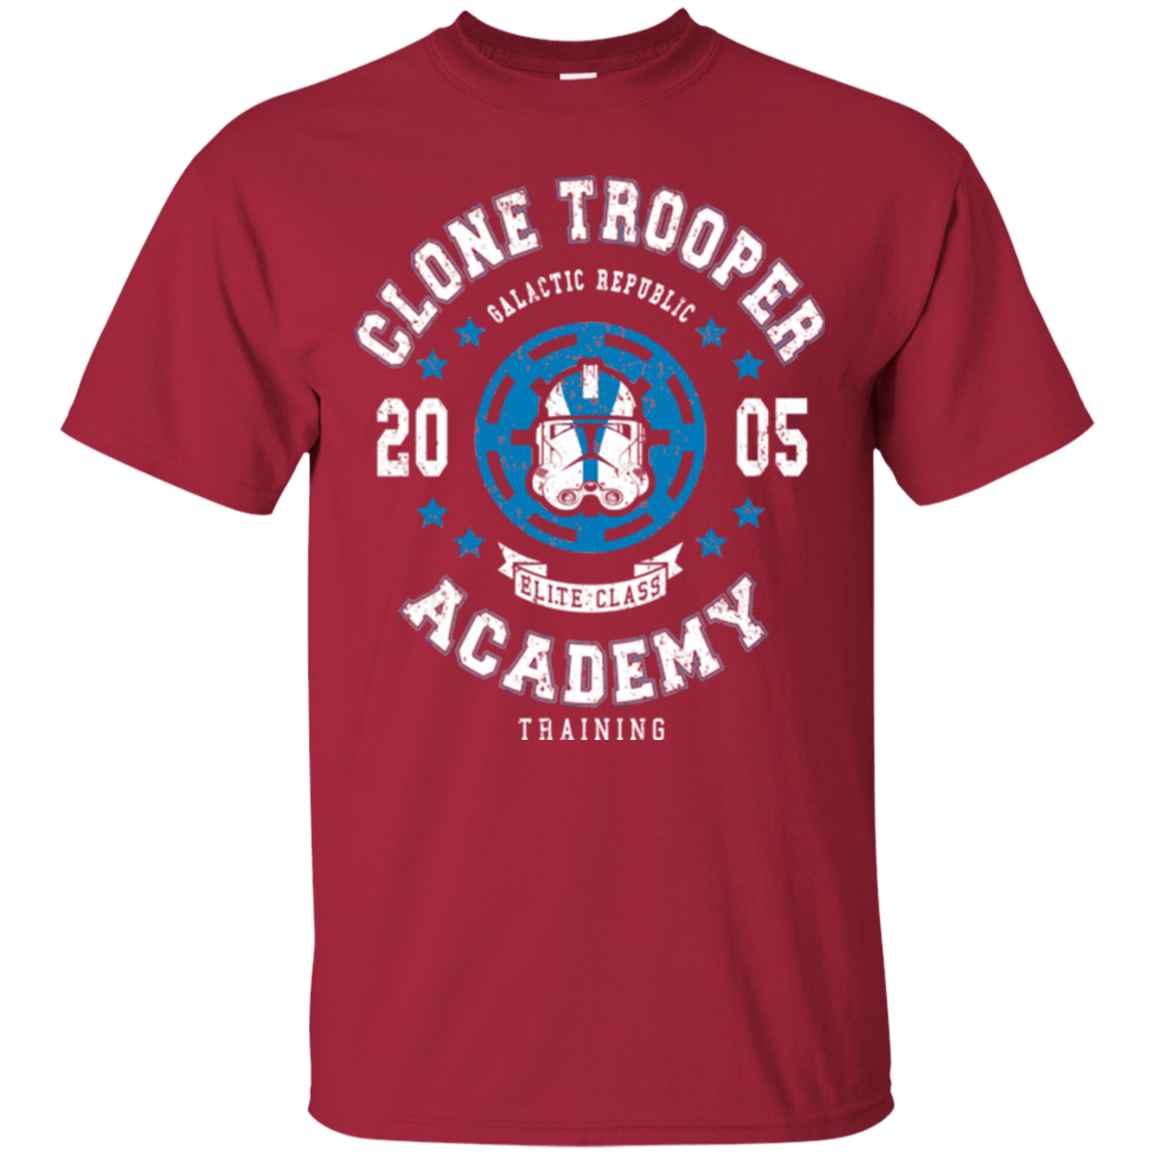 T-Shirts Cardinal / Small Clone Trooper Academy 05 T-Shirt